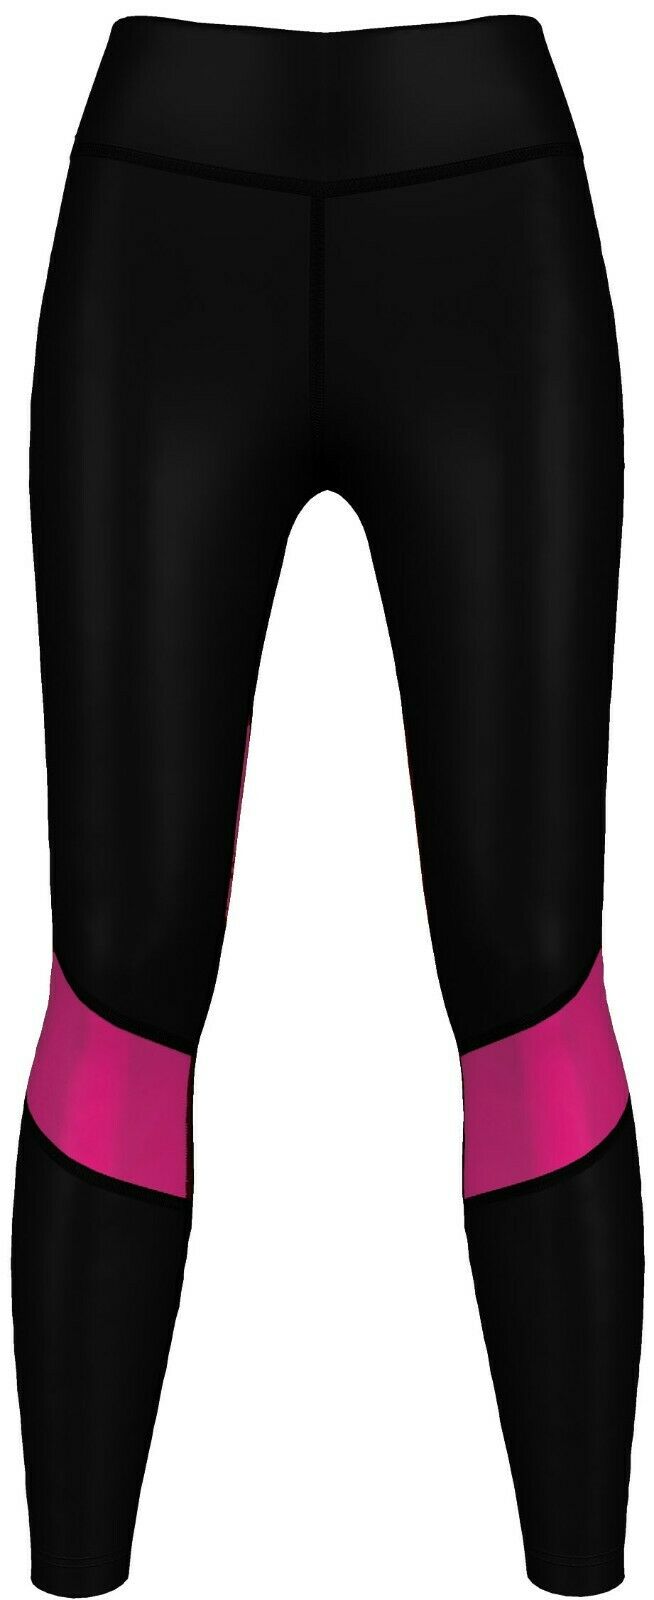 Compression Pants Womens Running Skins Yoga Gym Black Pink Red Leggings Xs-3Xl